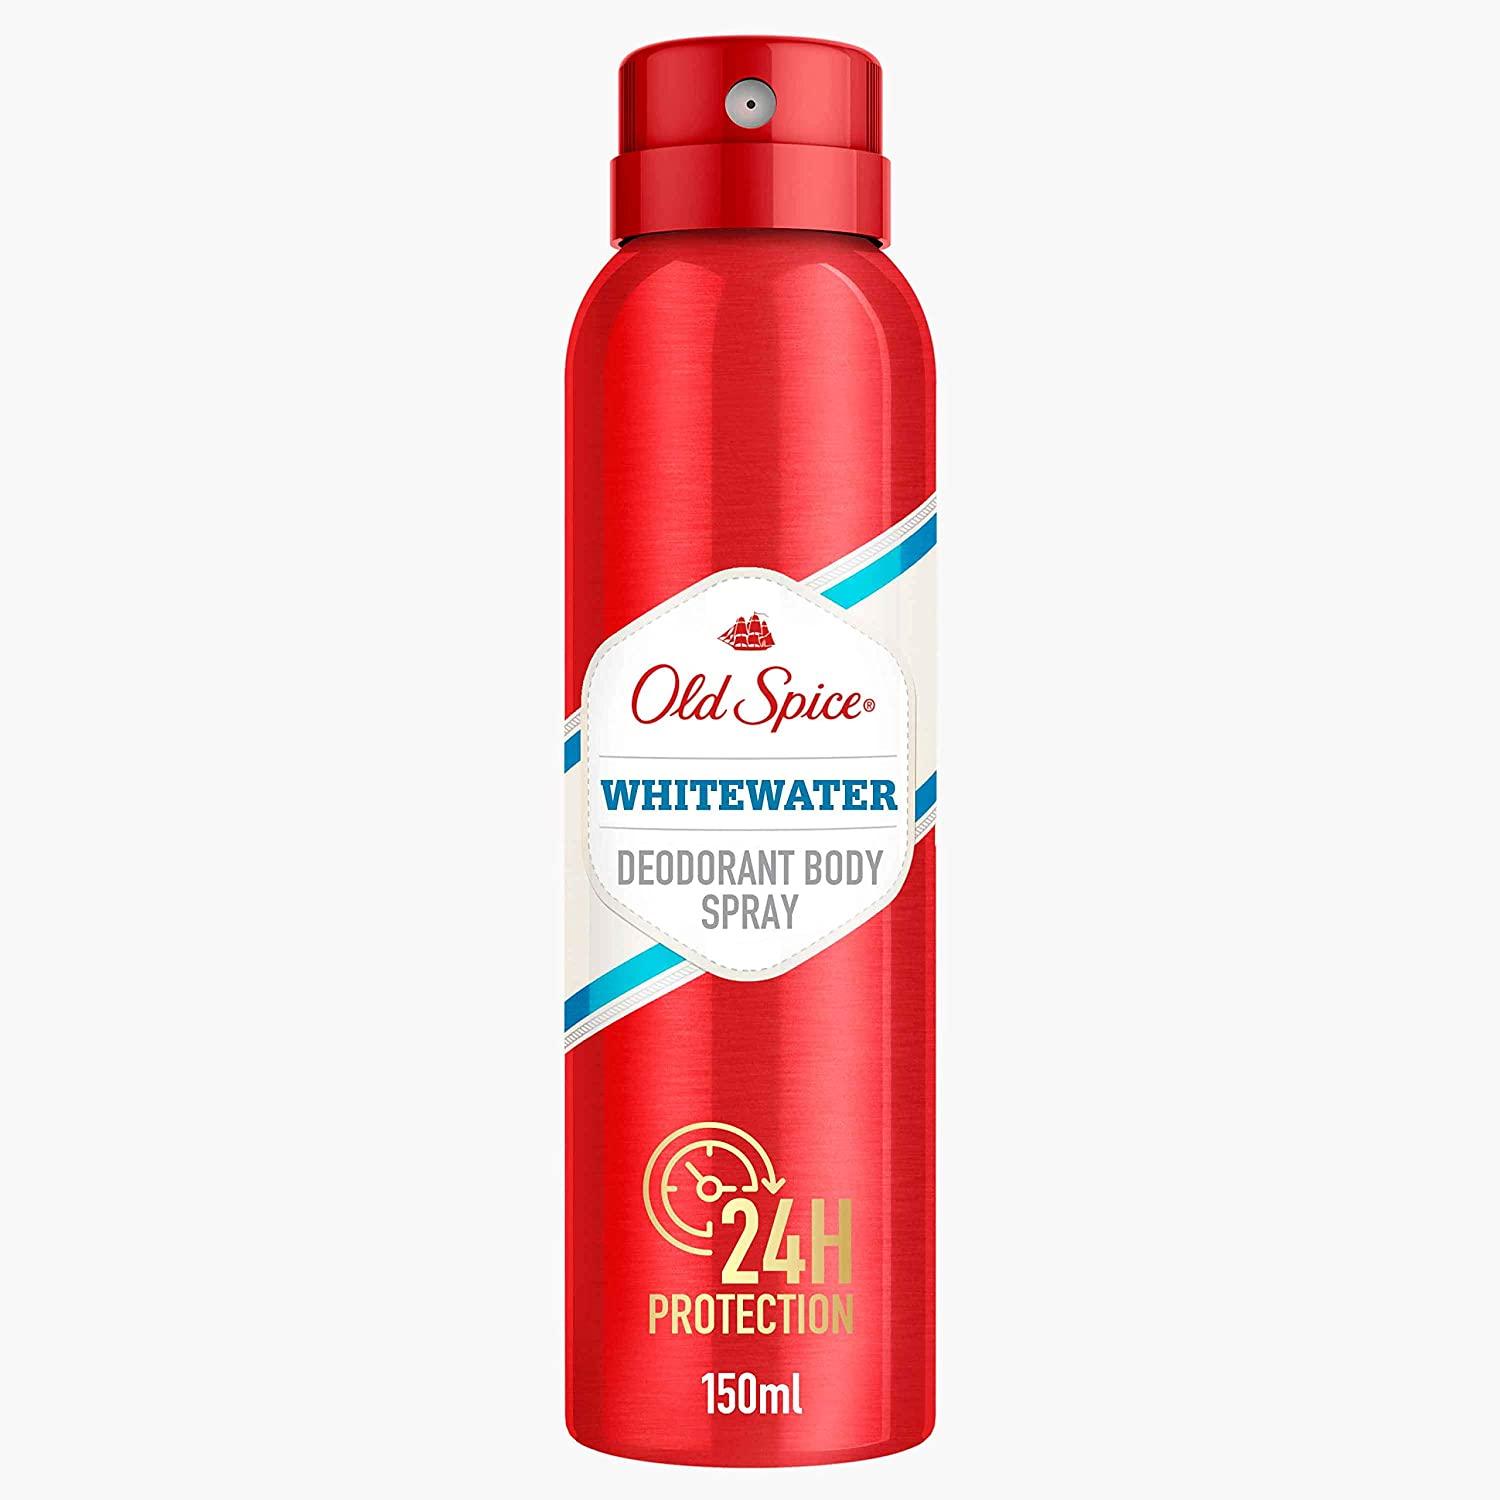 Old Spice Whitewater Deodorant Body Spray For Men 150 Ml 6 Packs